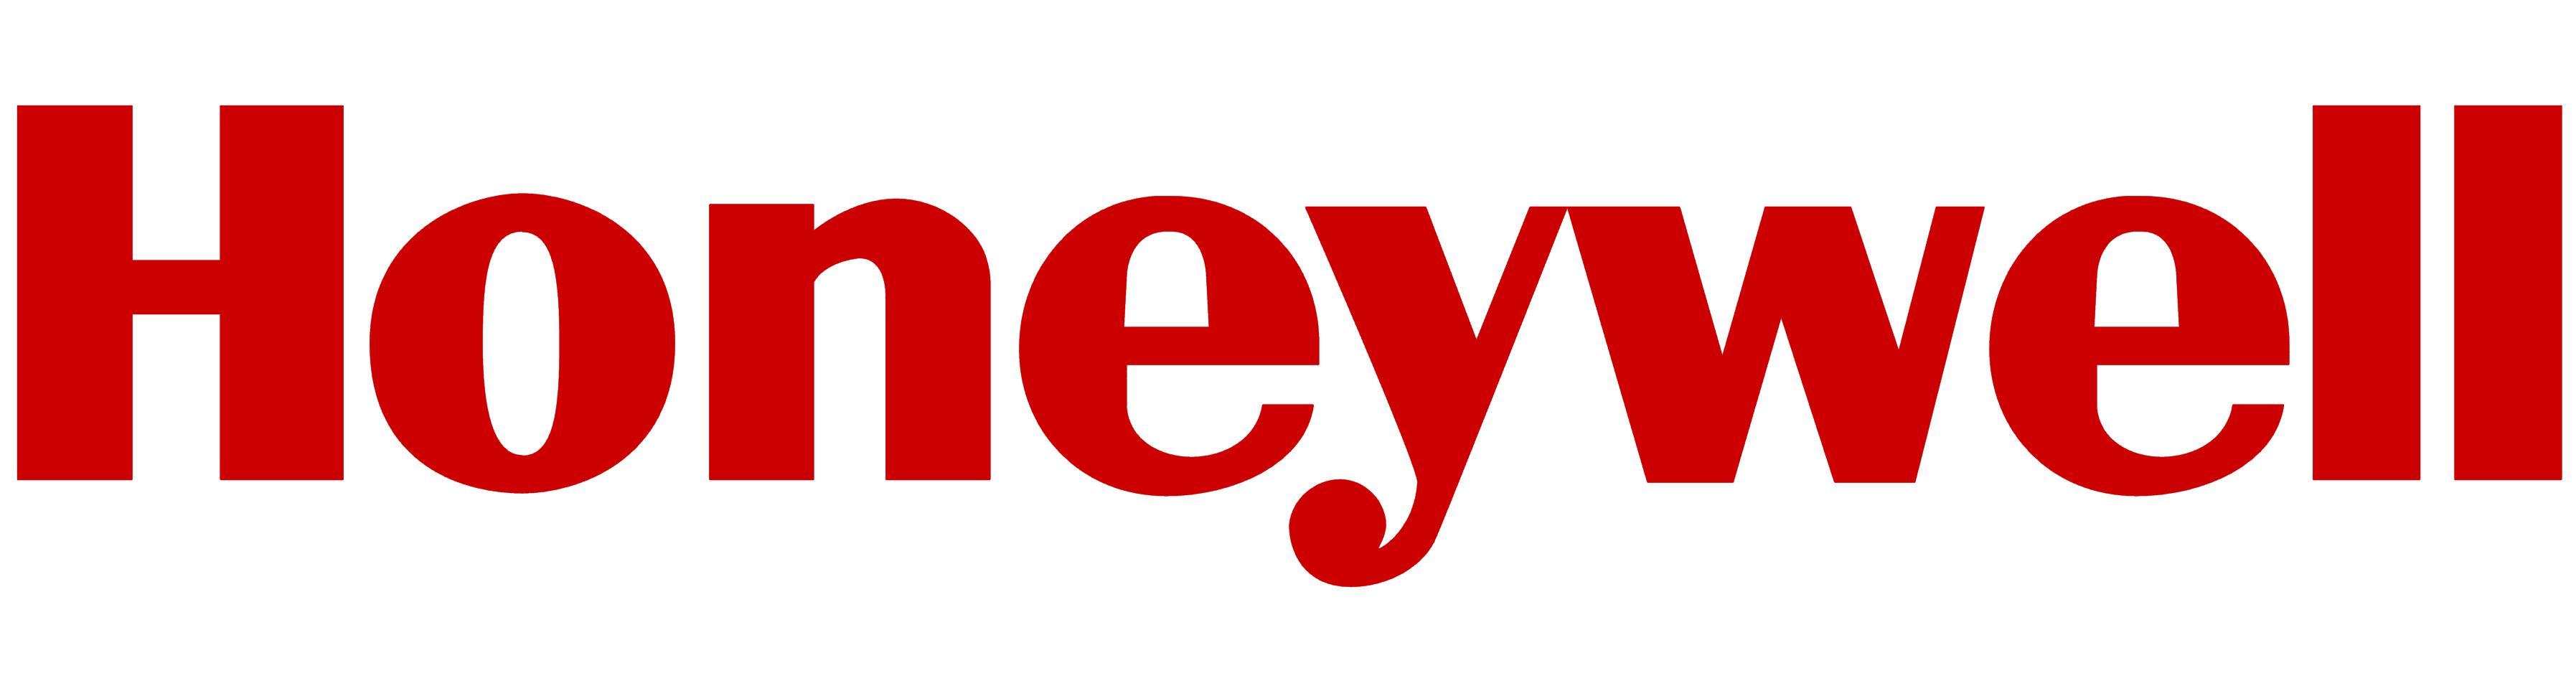 Honeywell logo, logotype